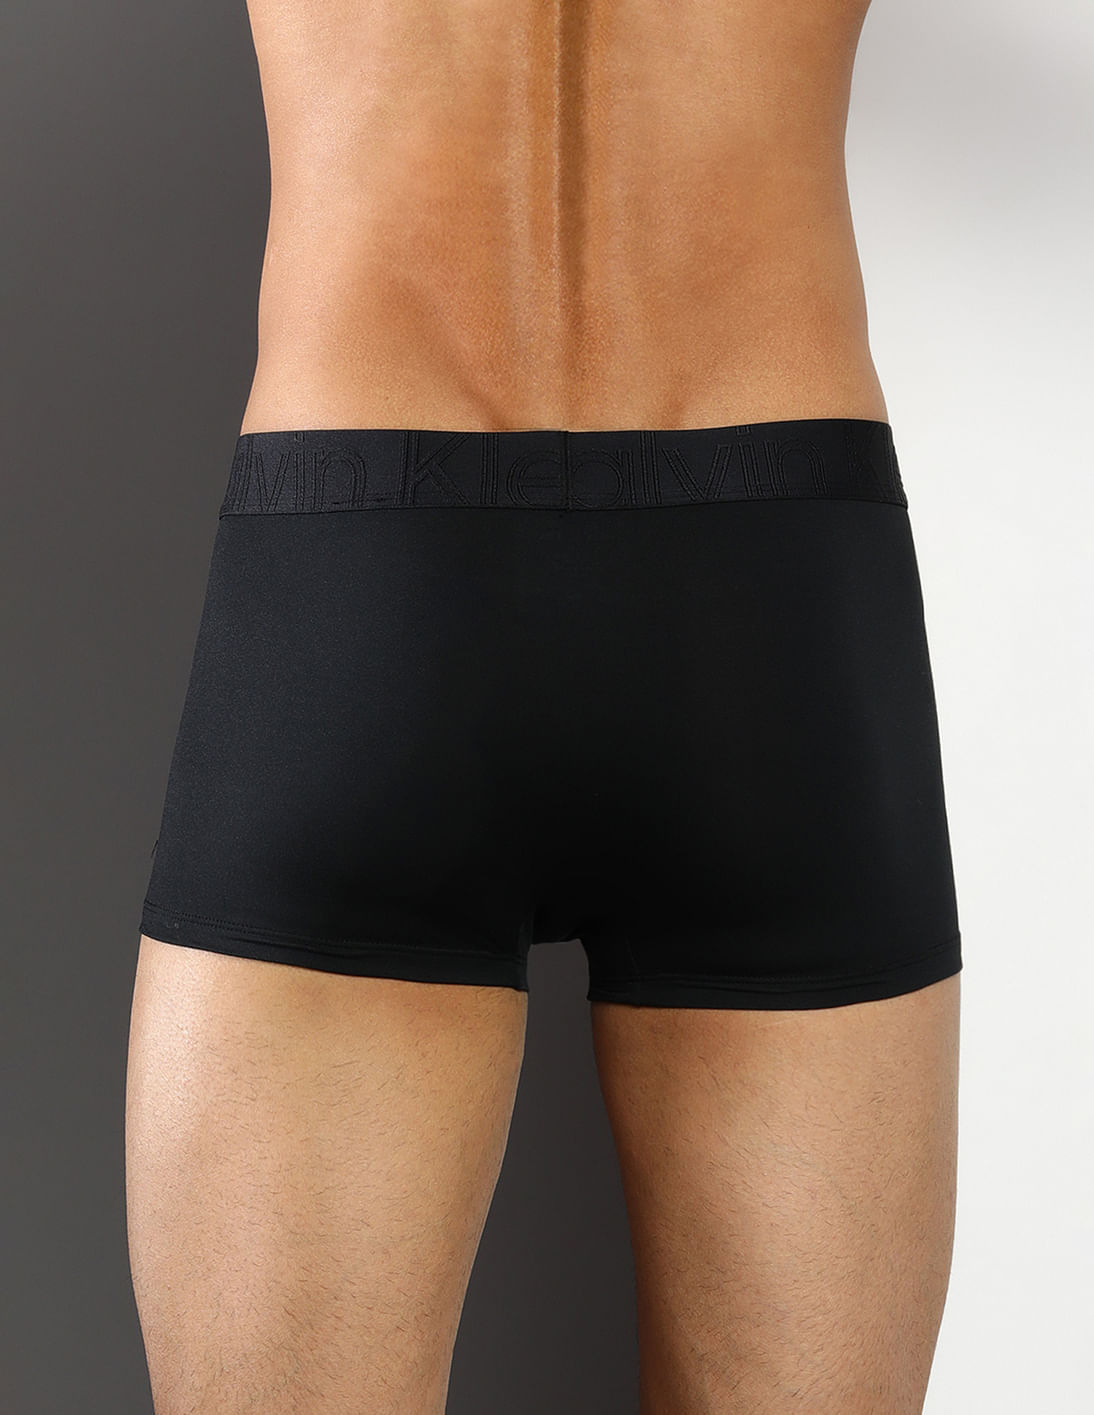 Buy Calvin Klein Underwear Men Black Low Rise Solid Trunks - NNNOW.com